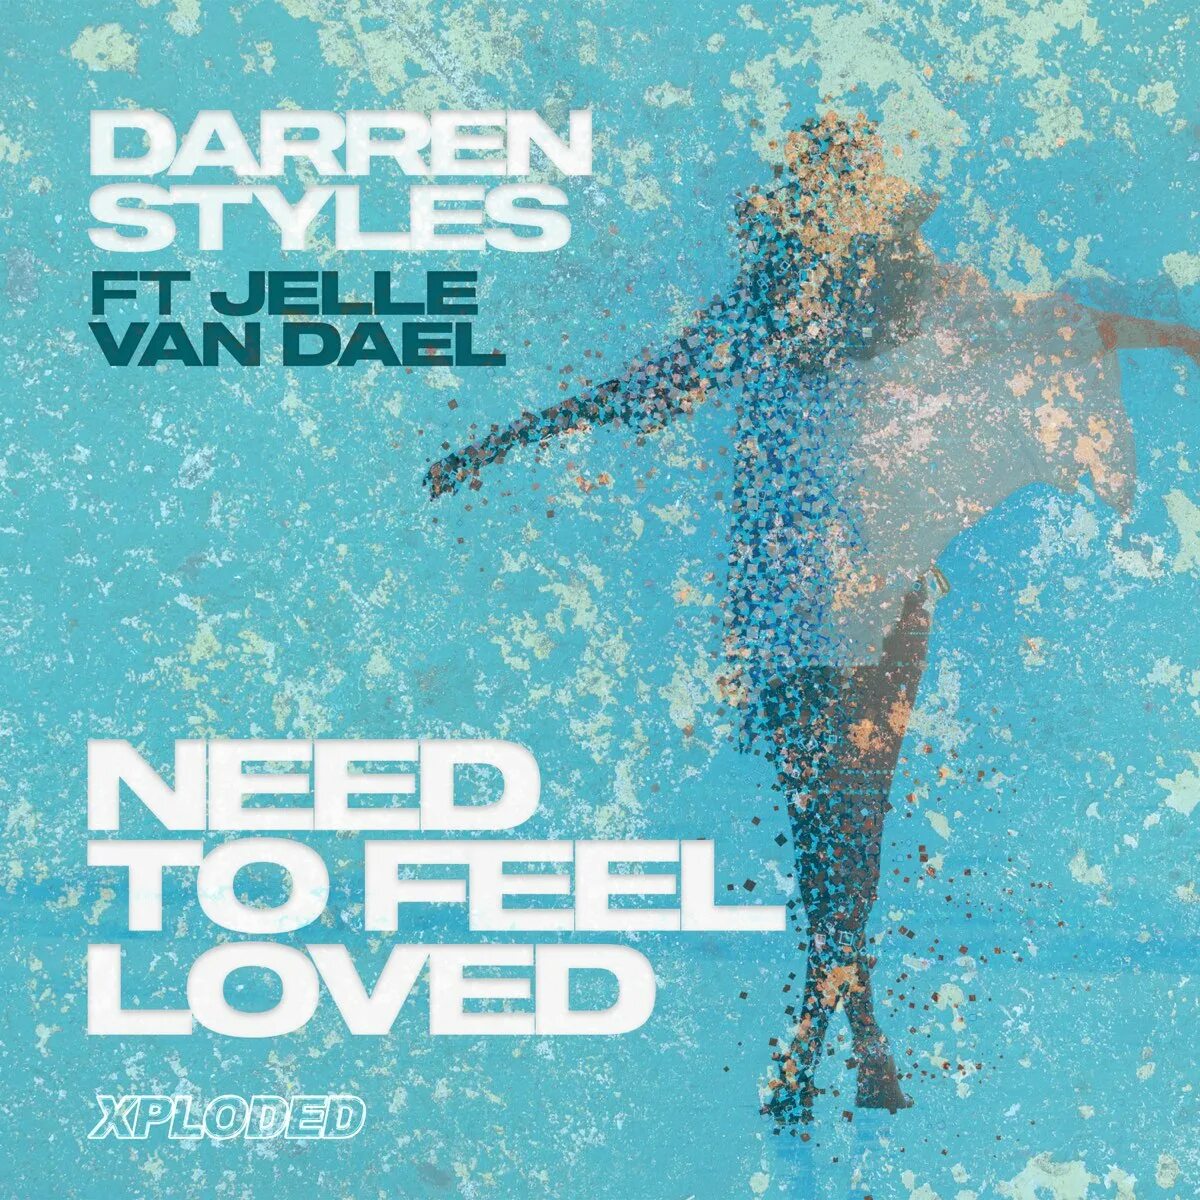 Need to feel Loved. Darren Styles,Jelle van Dael - need to feel Loved. Reflekt need to feel Loved. Album Art need to feel Loved need to feel Loved Delline Bass.